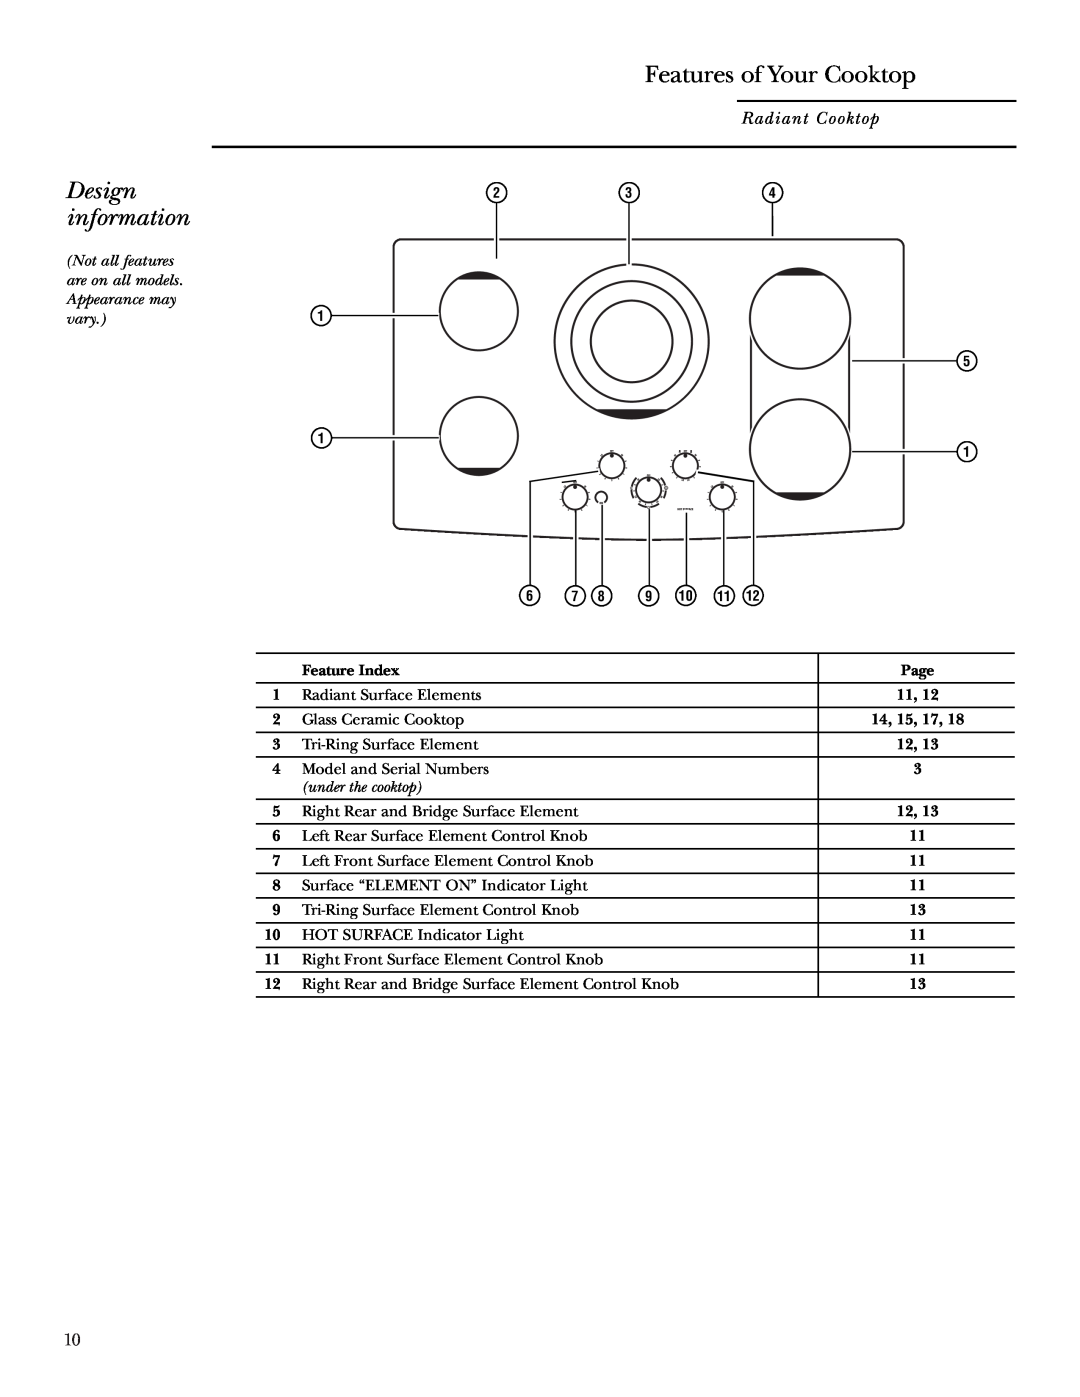 GE Monogram ZEU36K owner manual Design information, Features of Your Cooktop, Radiant Cooktop, under the cooktop 